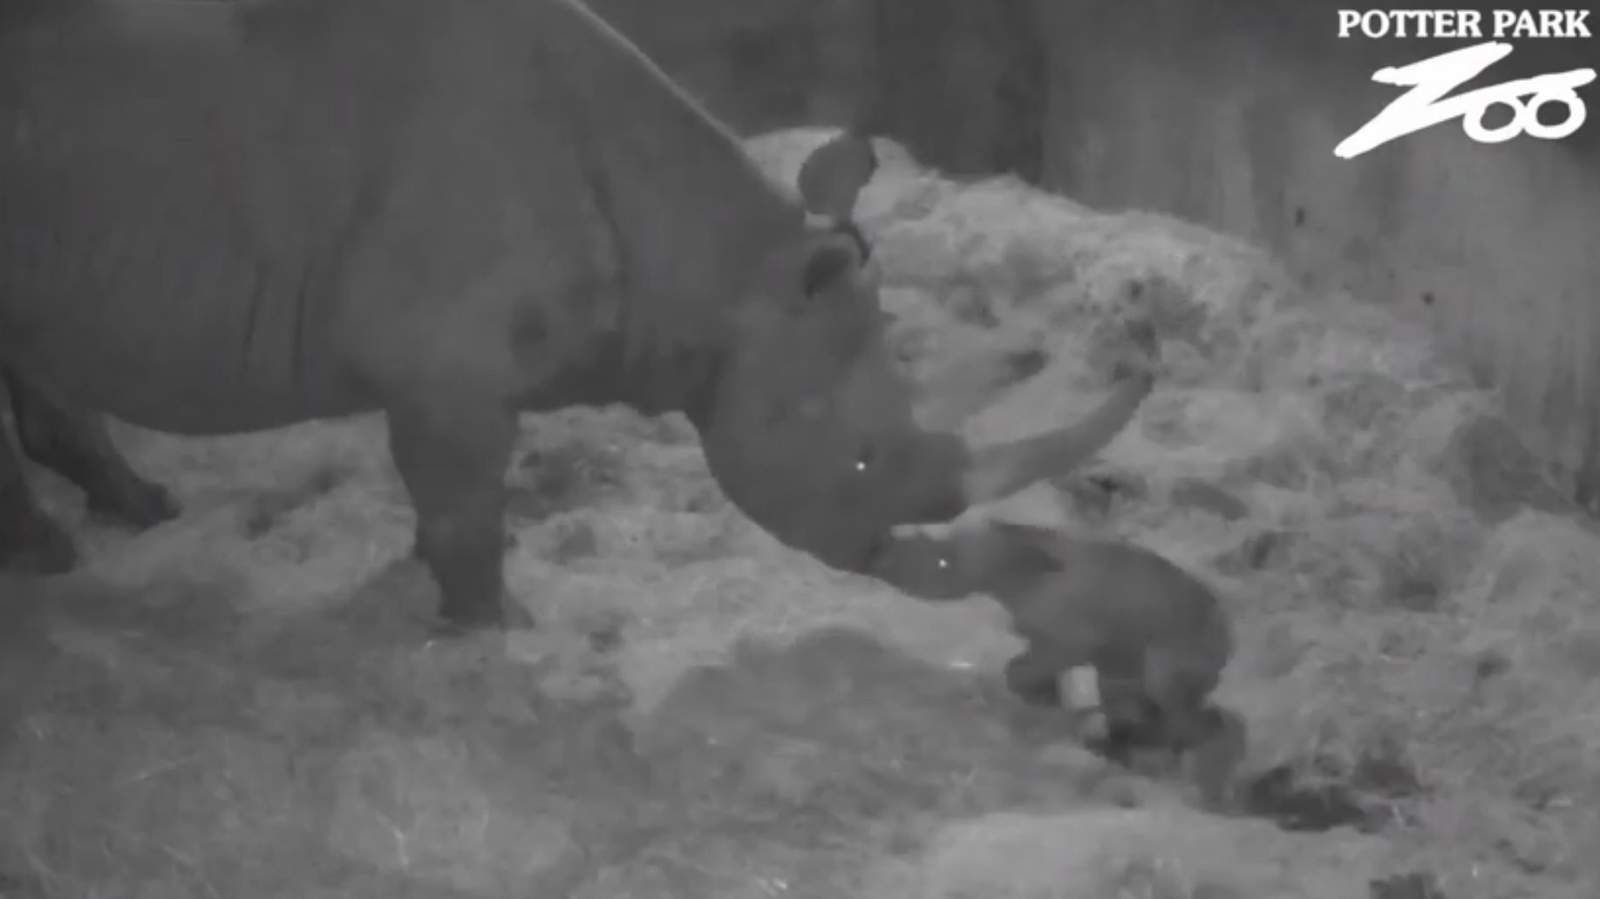 Potter Park Zoo celebrates birth of black rhino calf on Christmas Eve